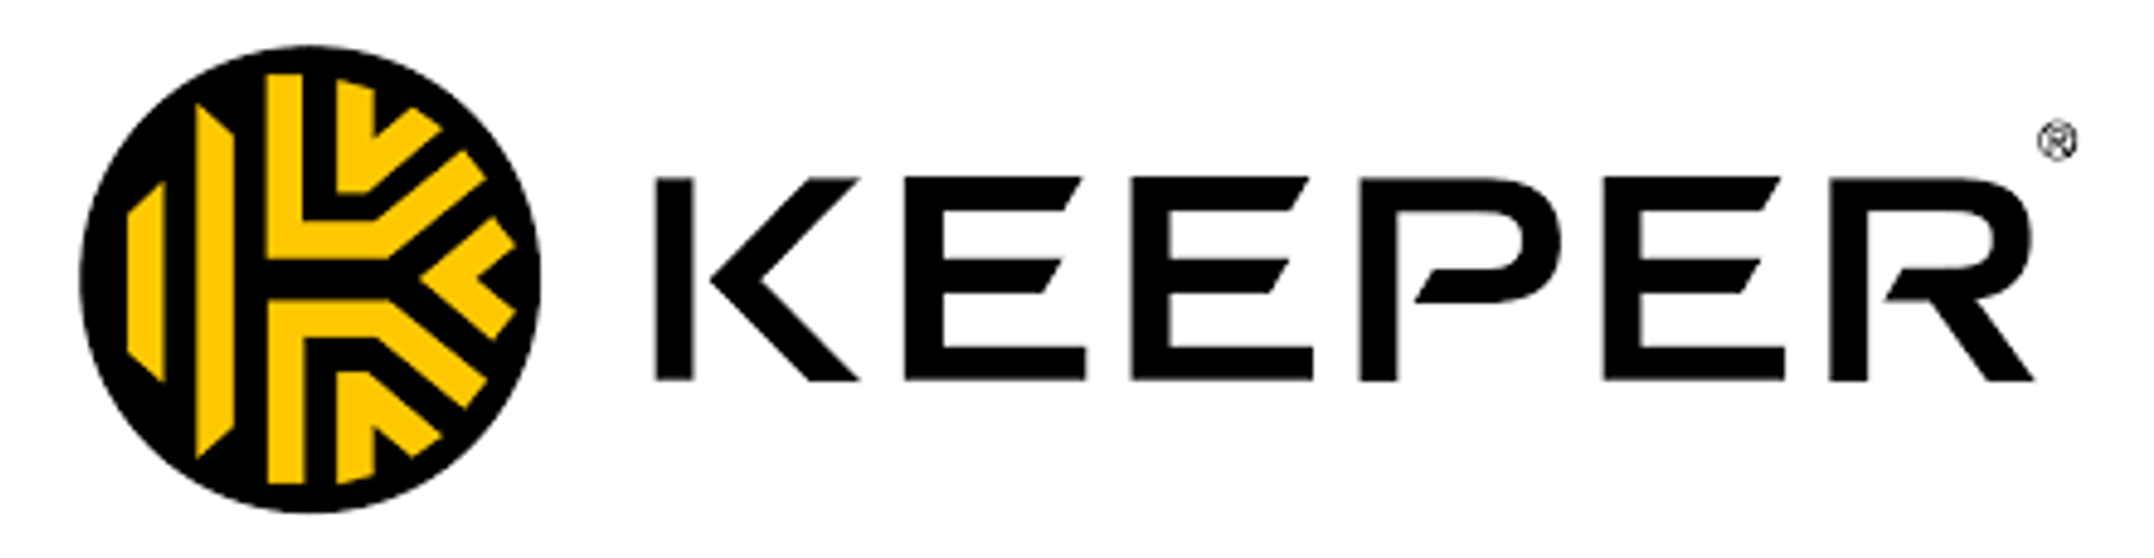 Keeper_logo_TFS_IT Support London company